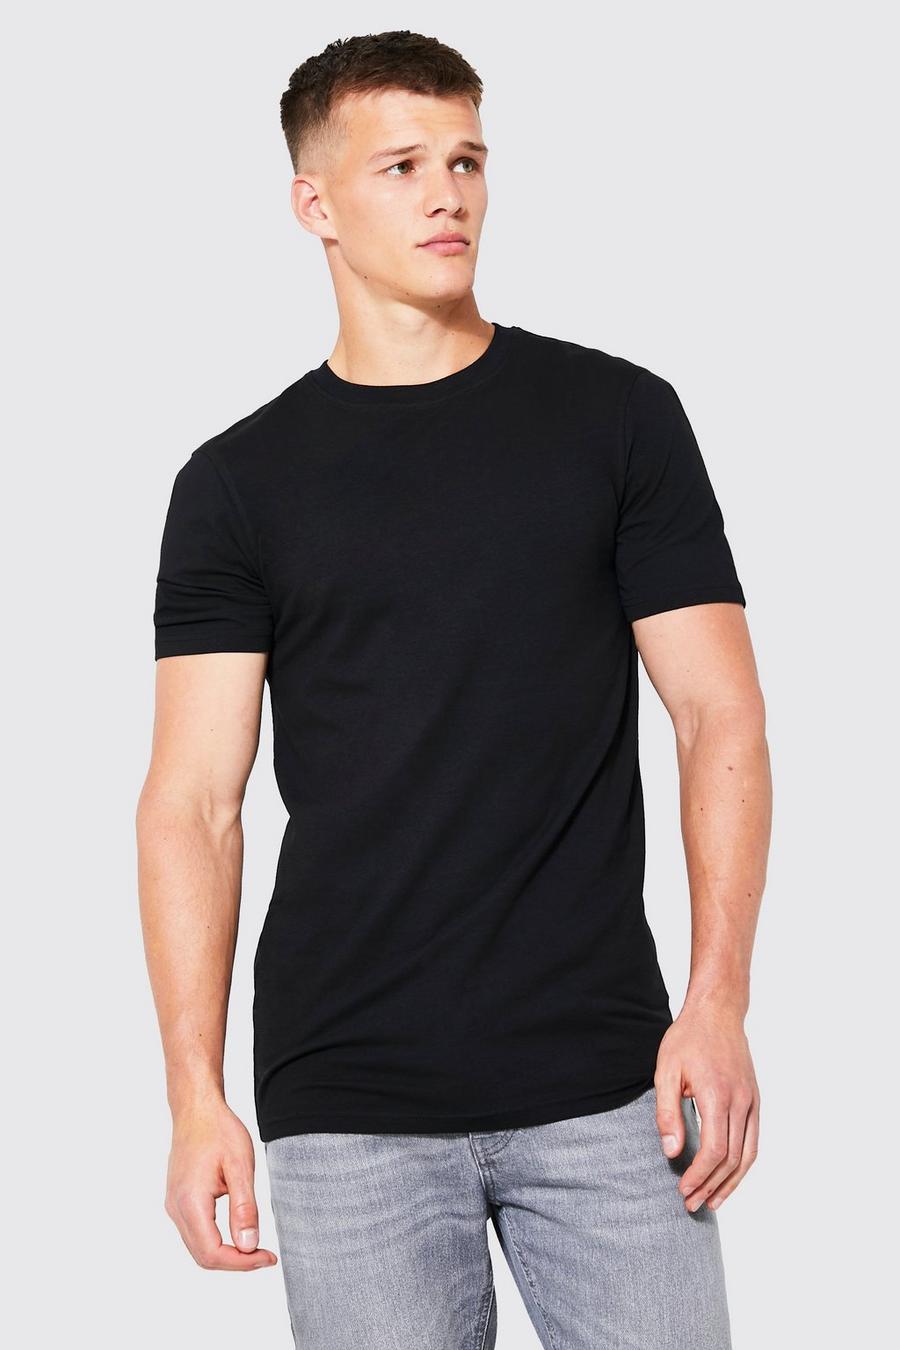 Black Tall - T-shirt i muscle fit med rund hals